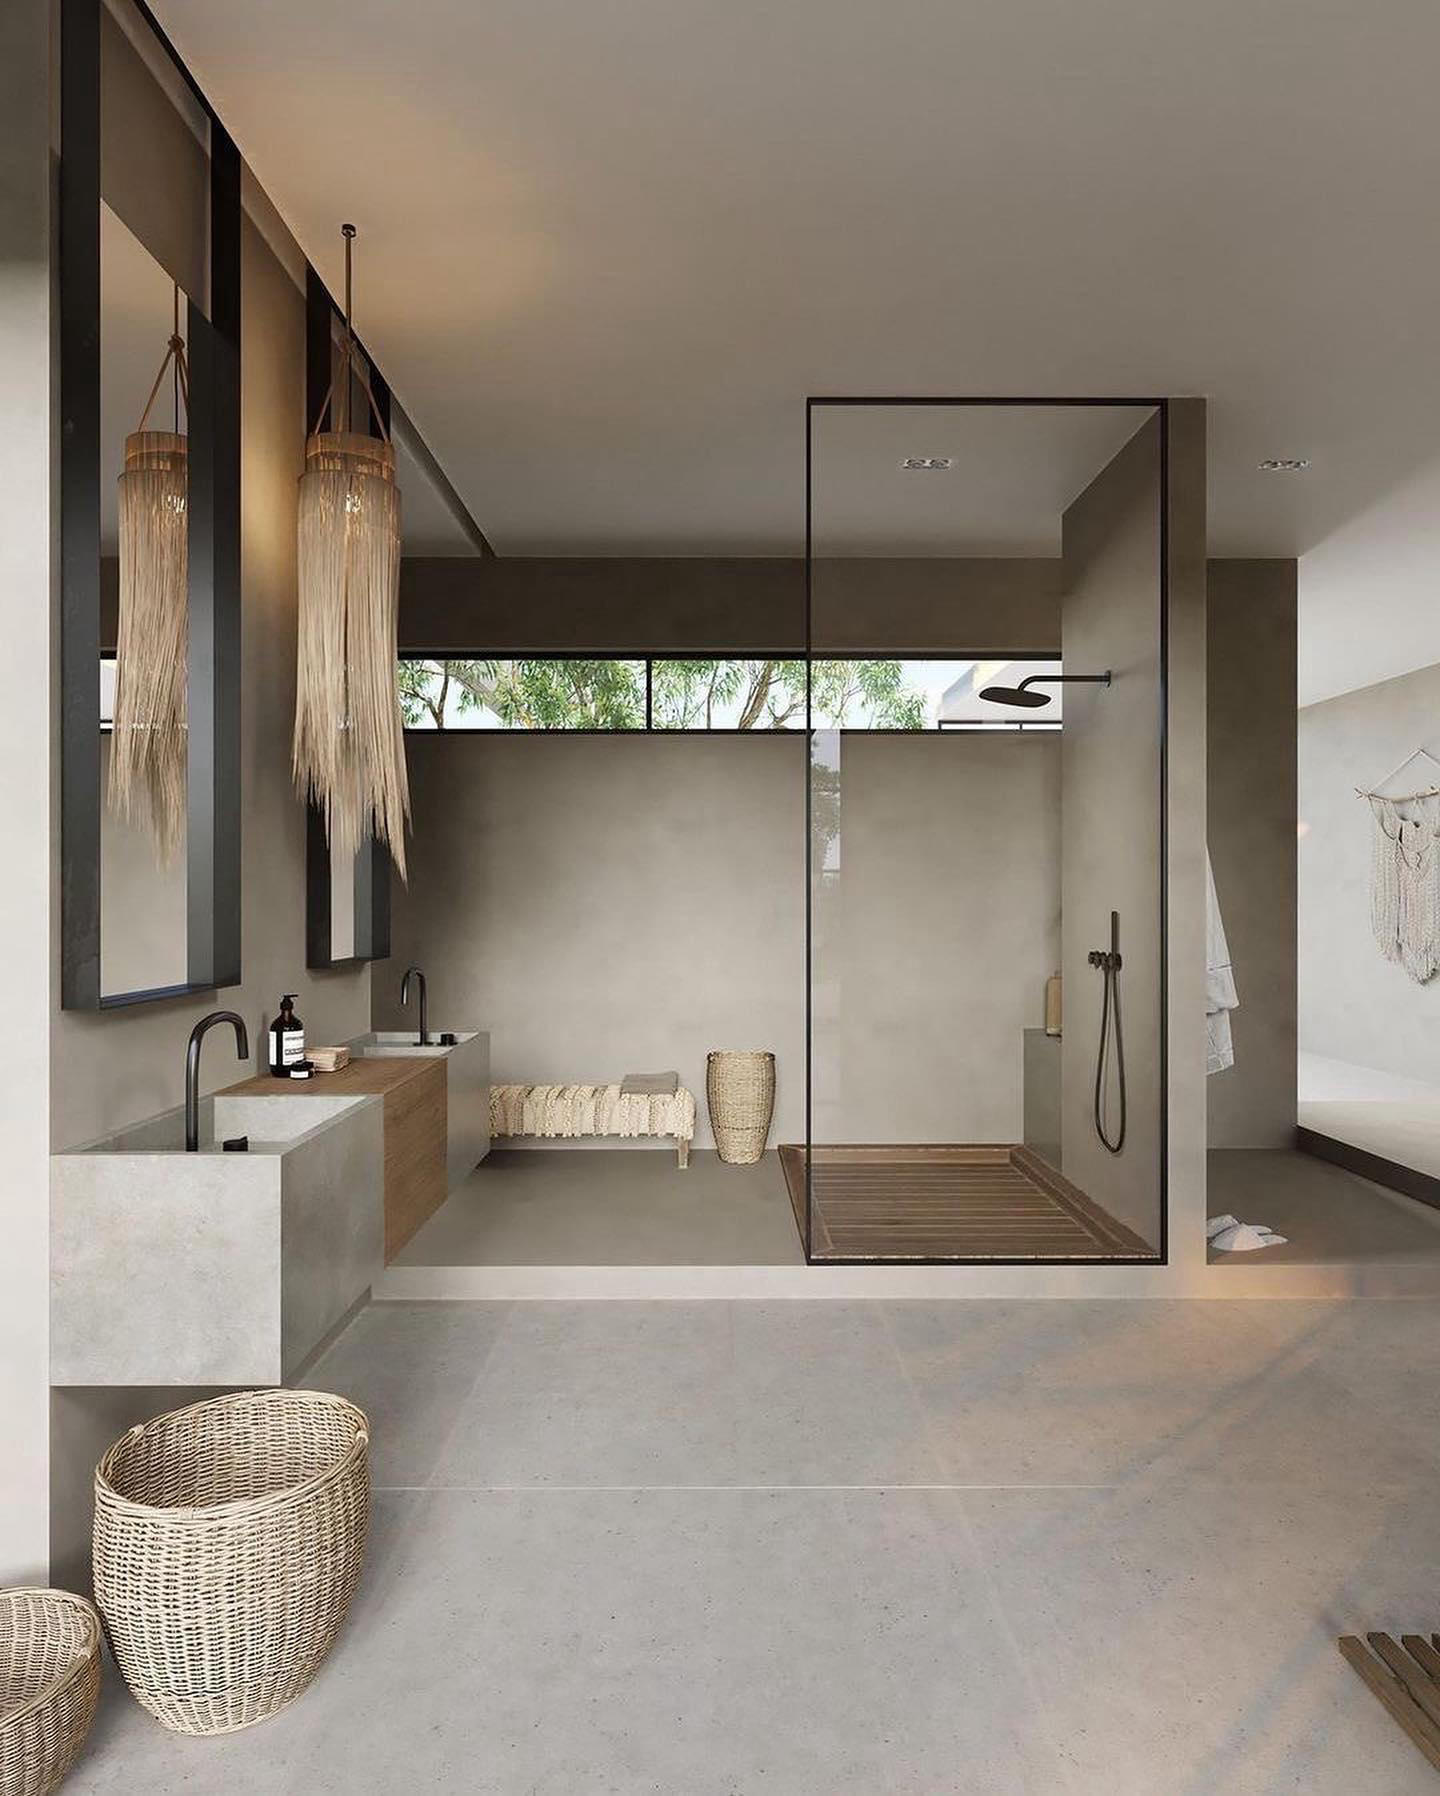 Top Luxury Homes - Bathroom inspiration